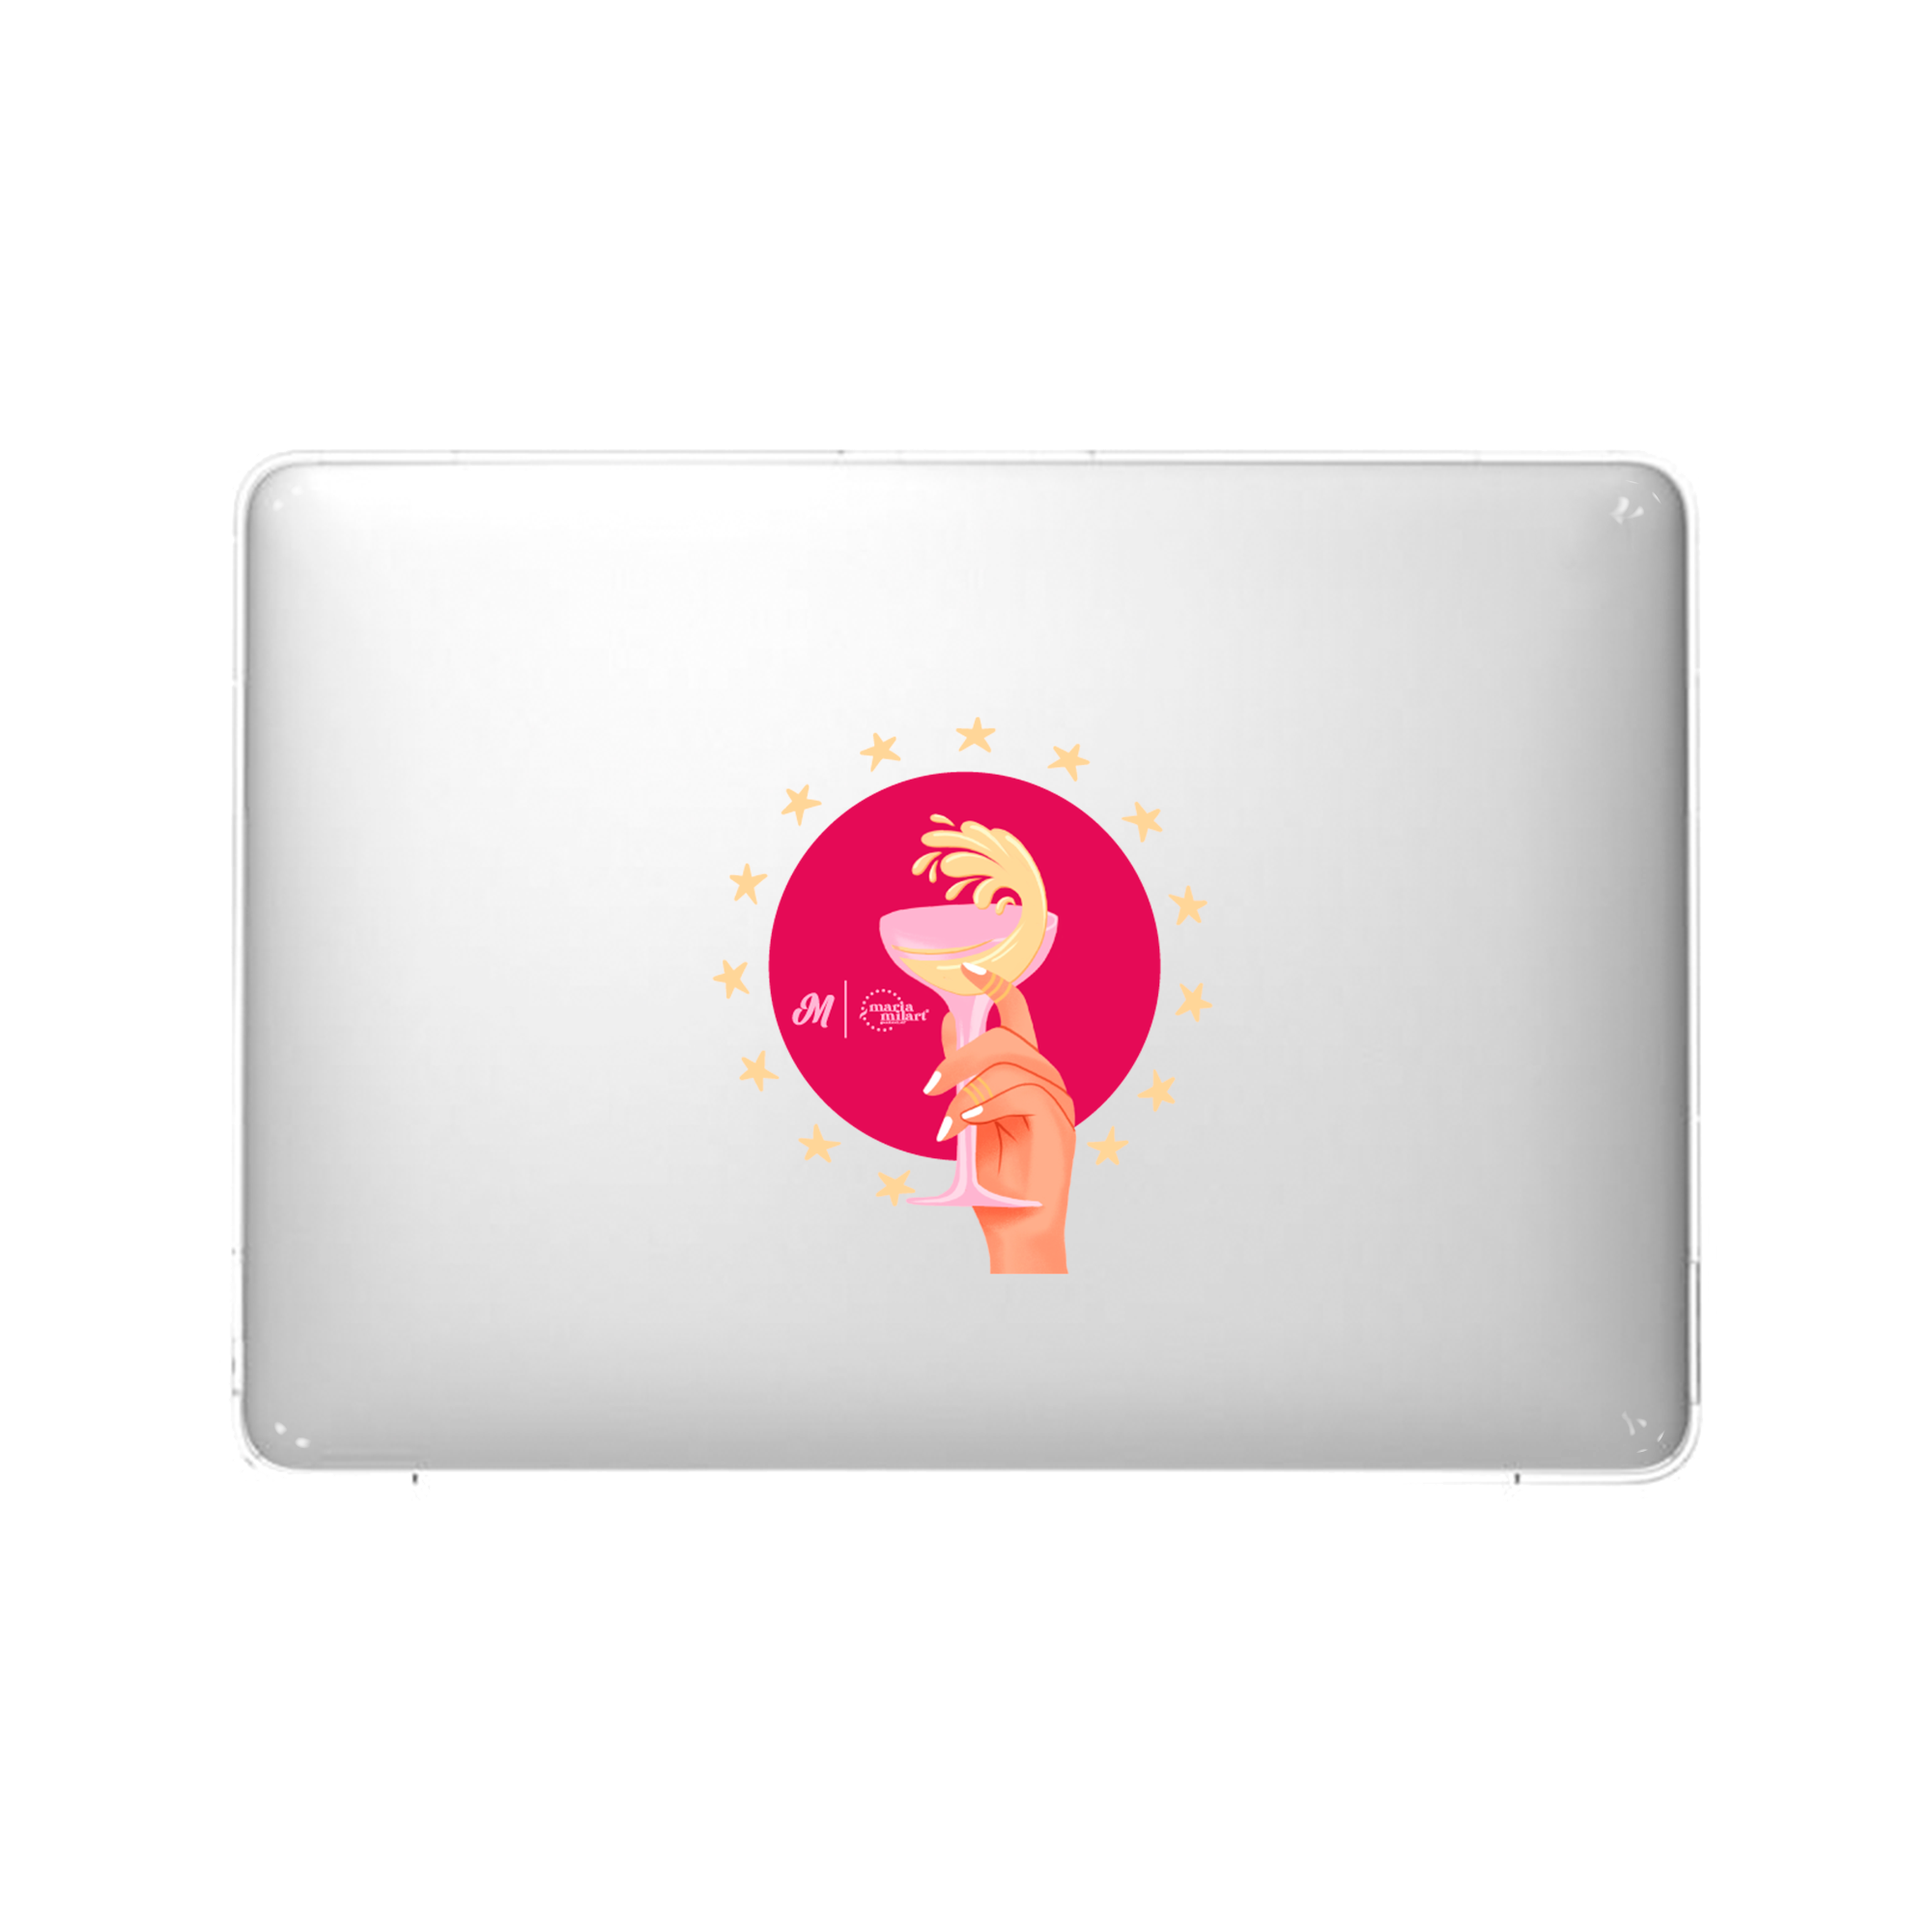 Salud MacBook Case - Mandala Cases